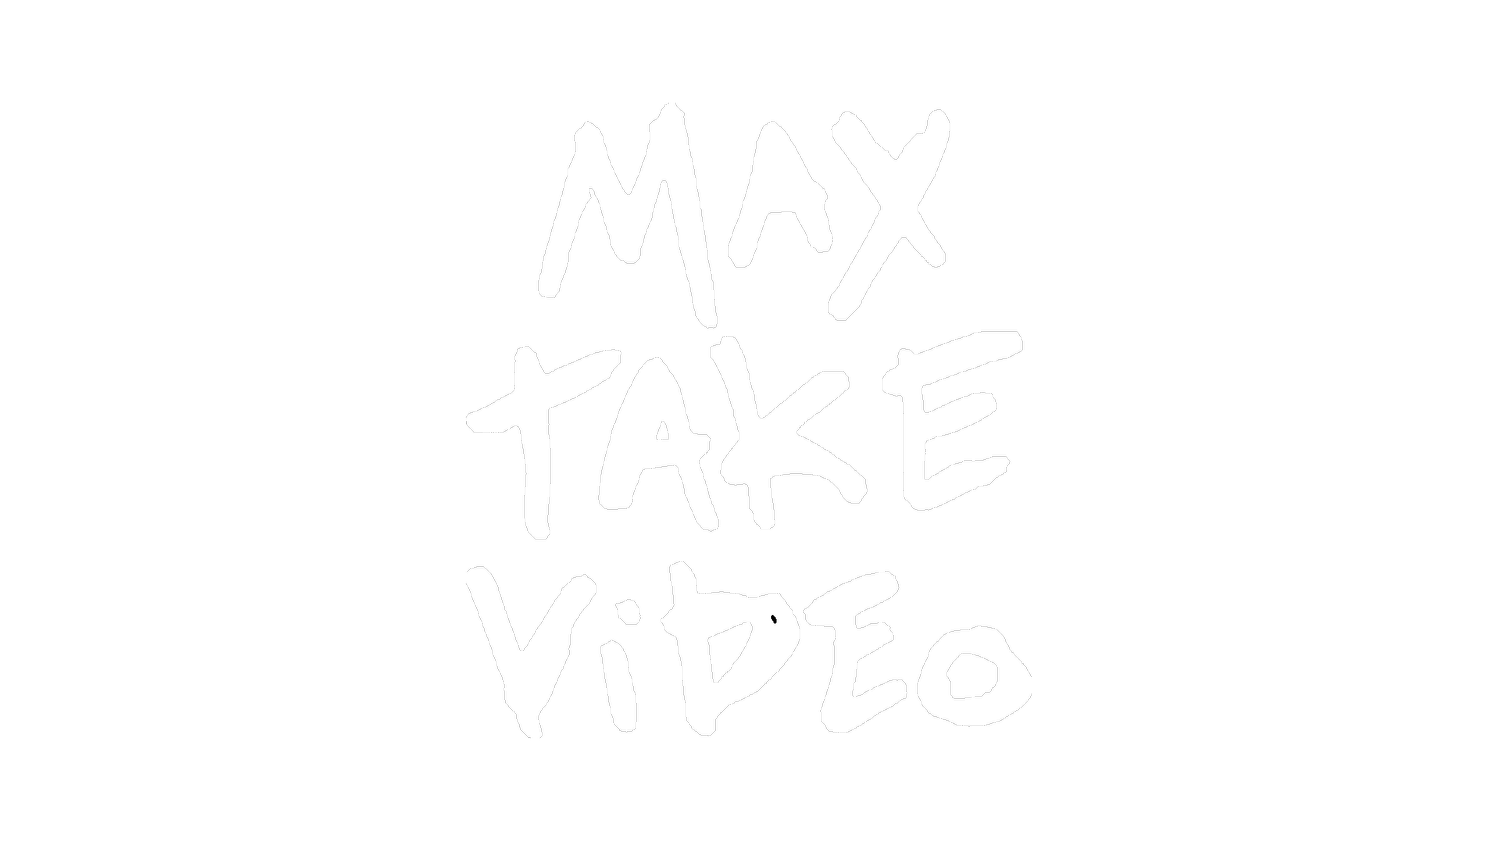 Max Take Video